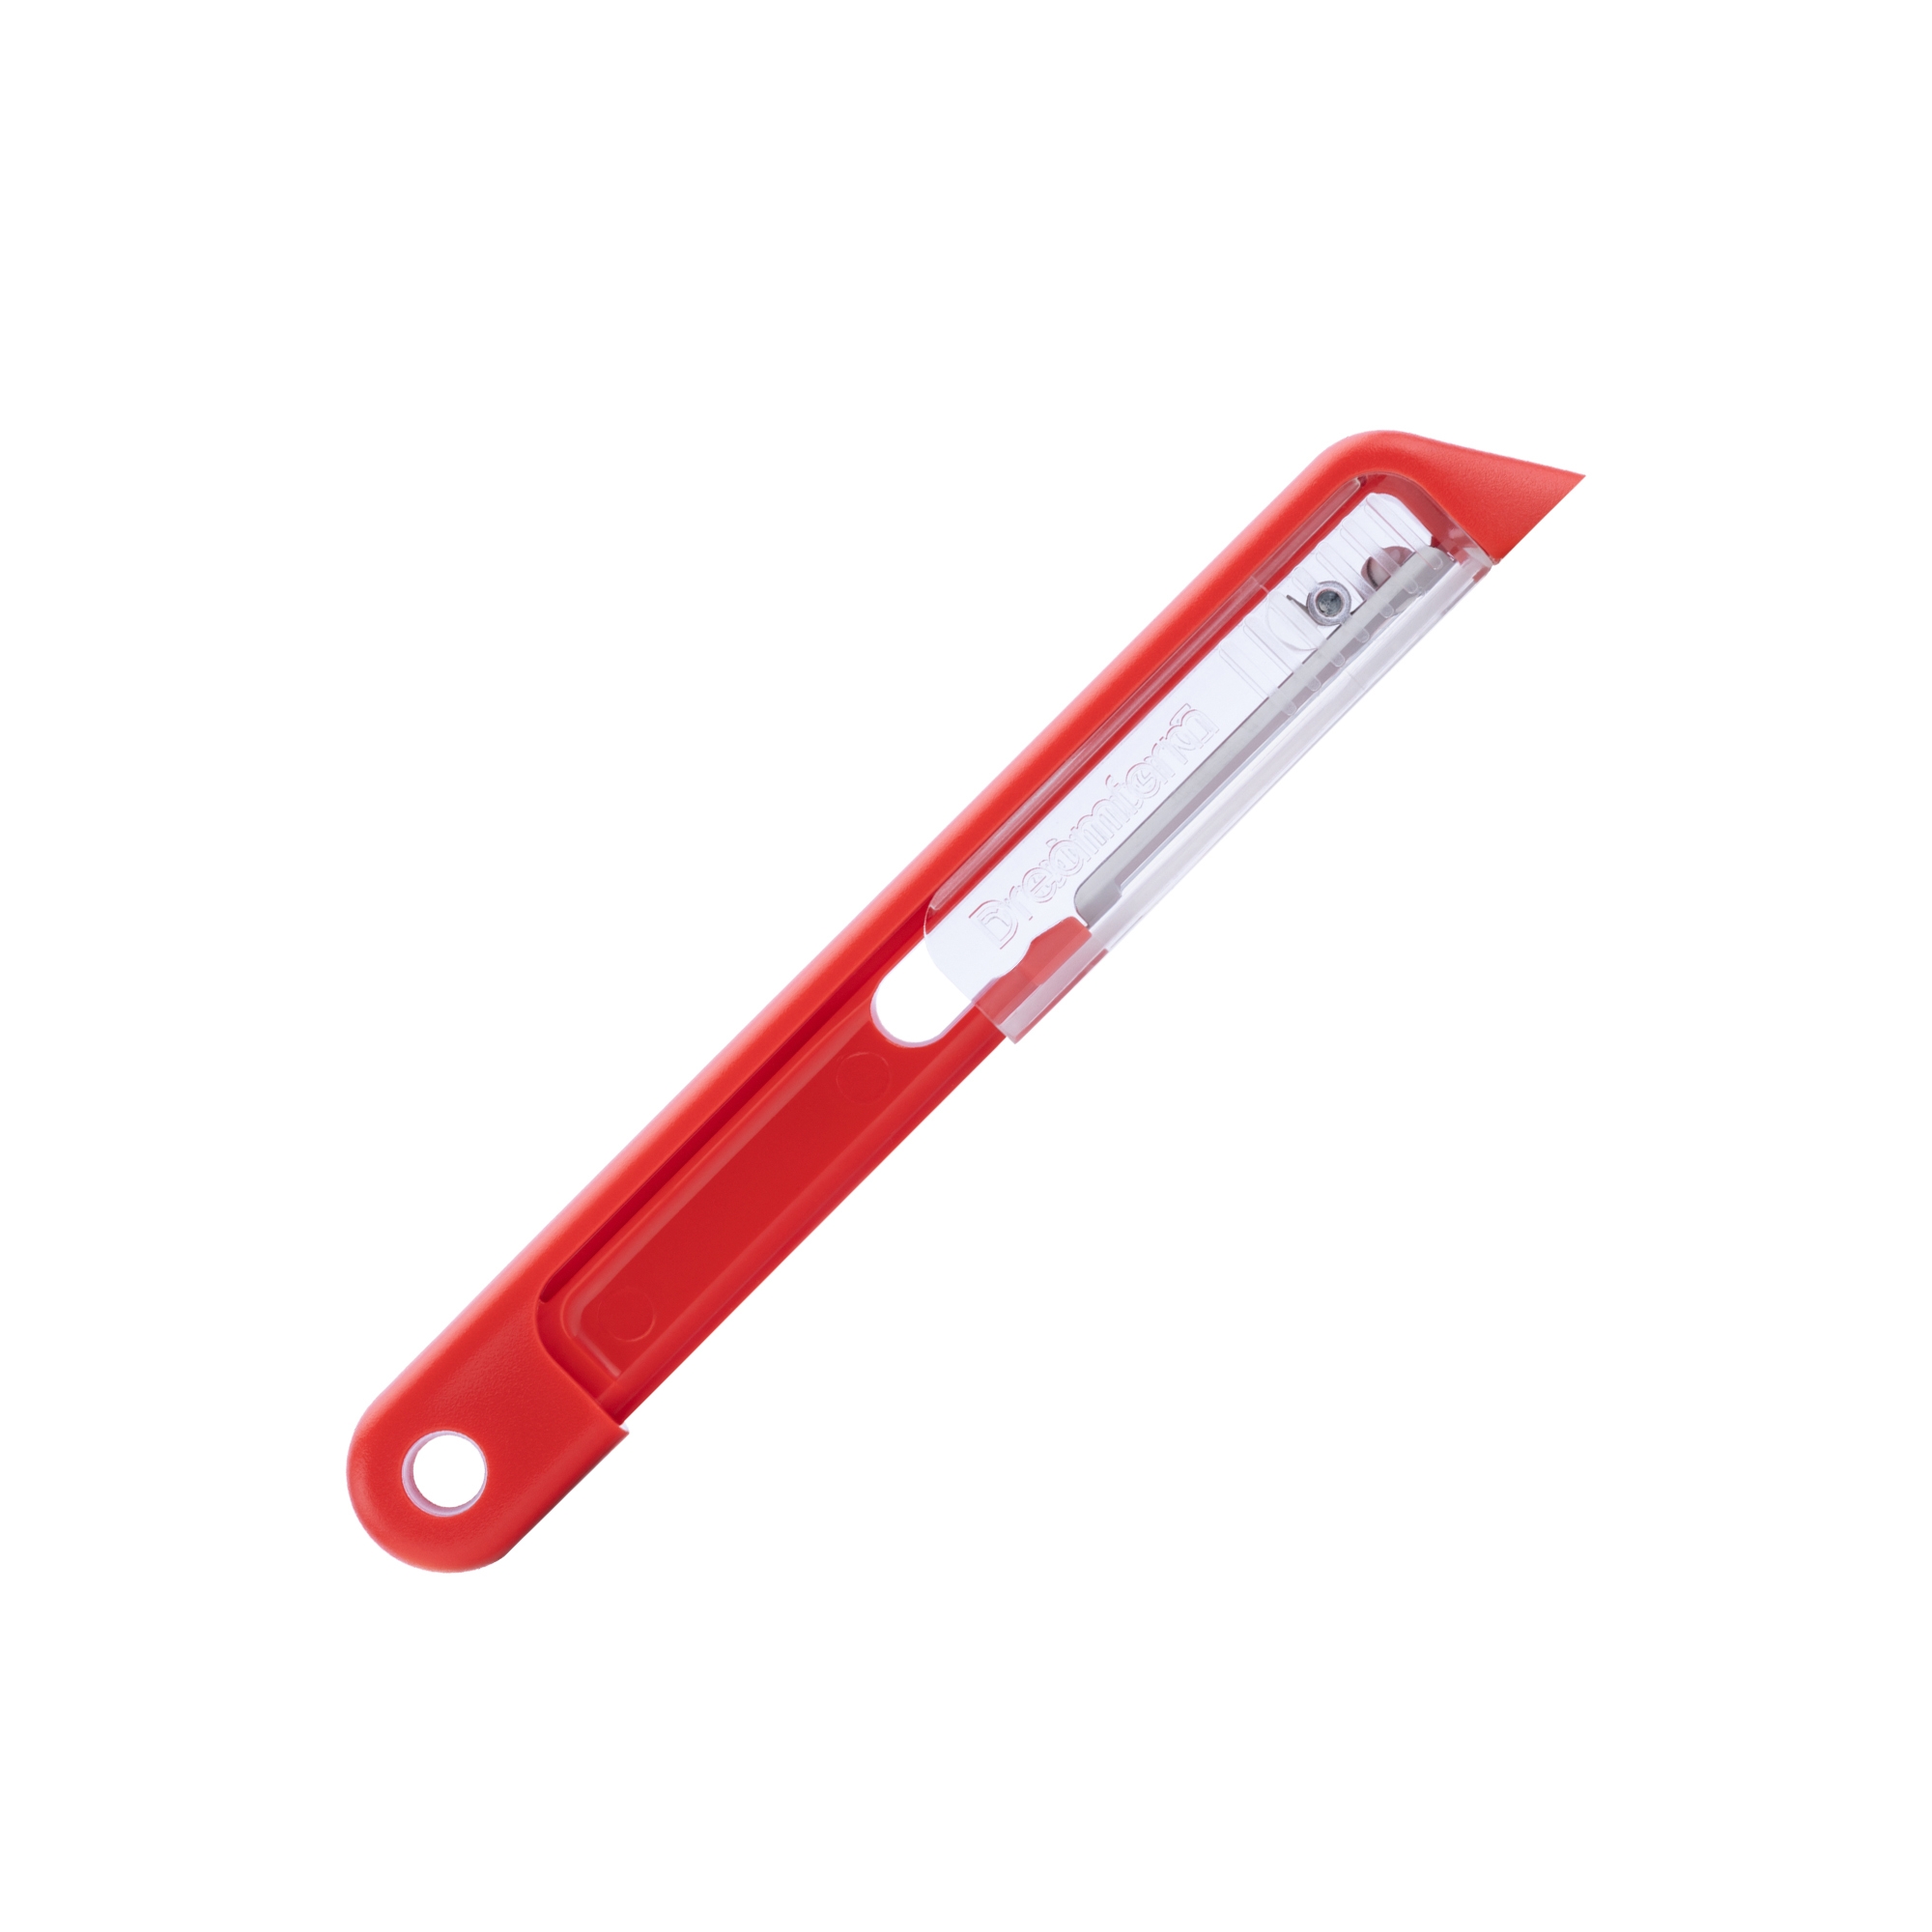 Dreamfarm Sharple Sharp Safety Peeler Red Image 1